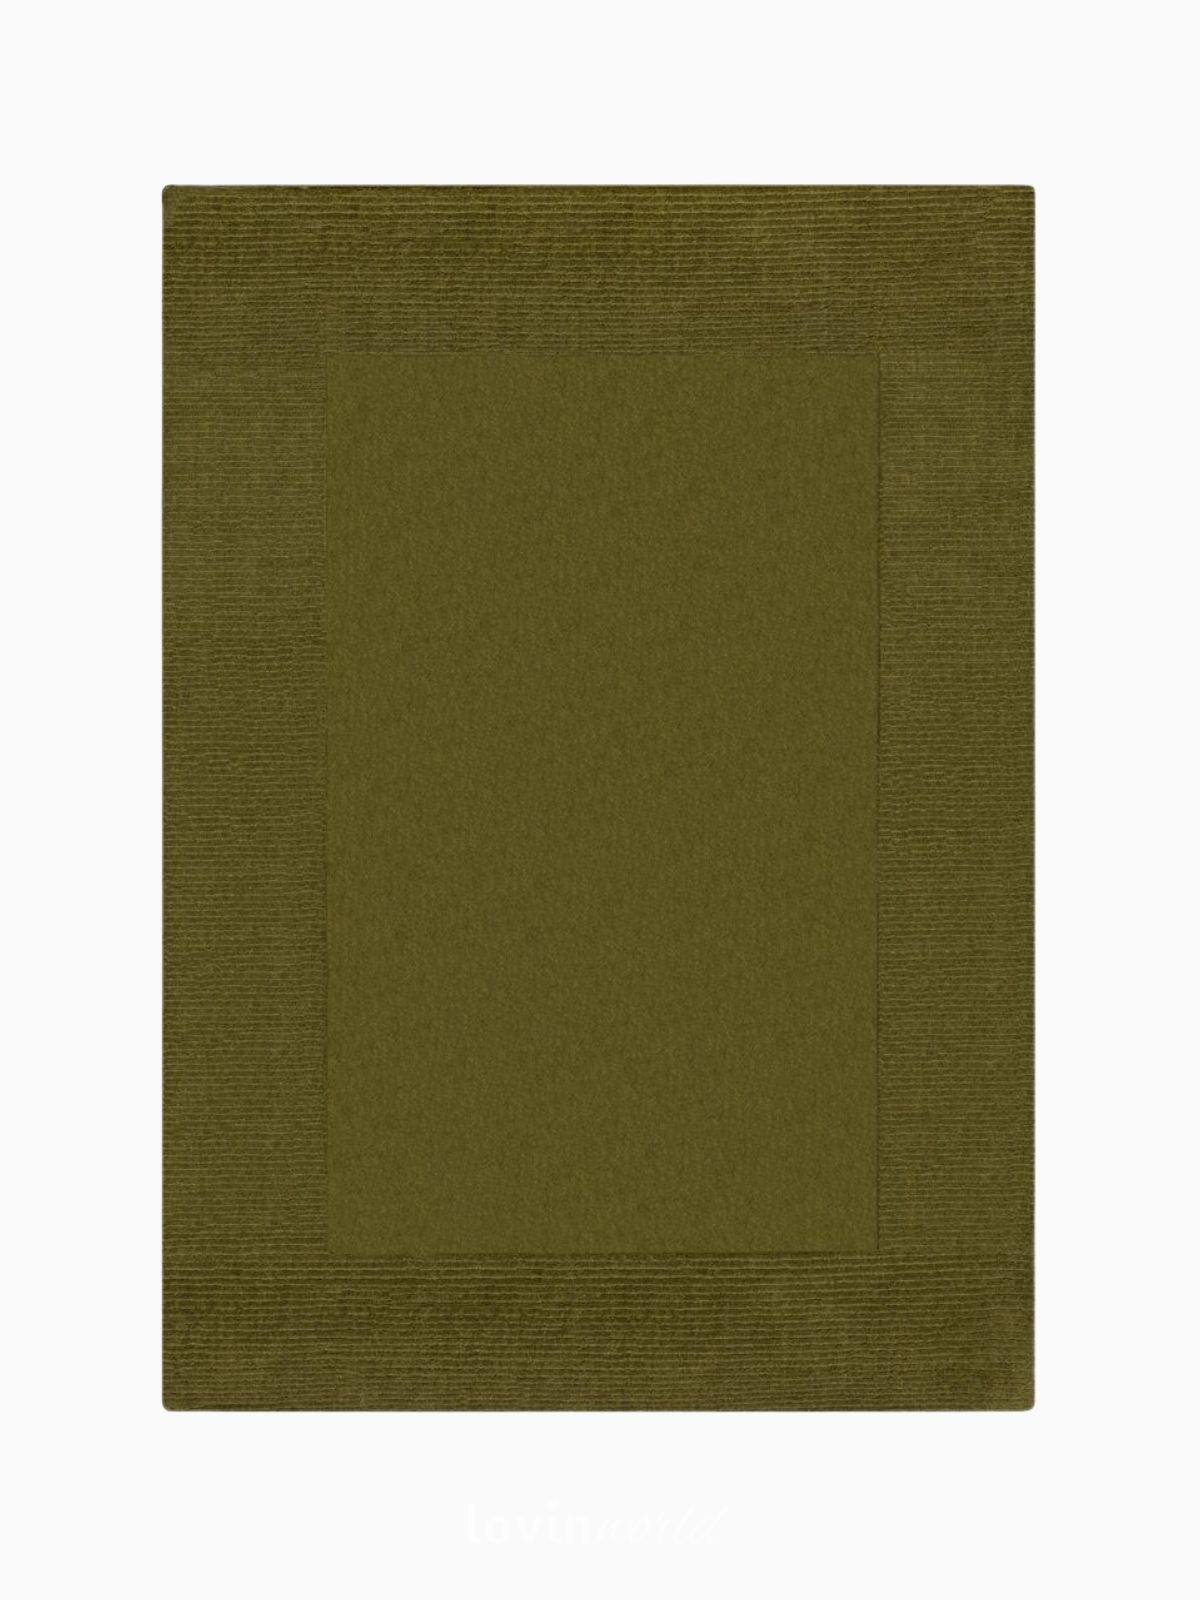 Tappeto di design Textured Wool Border in lana, colore verde-1